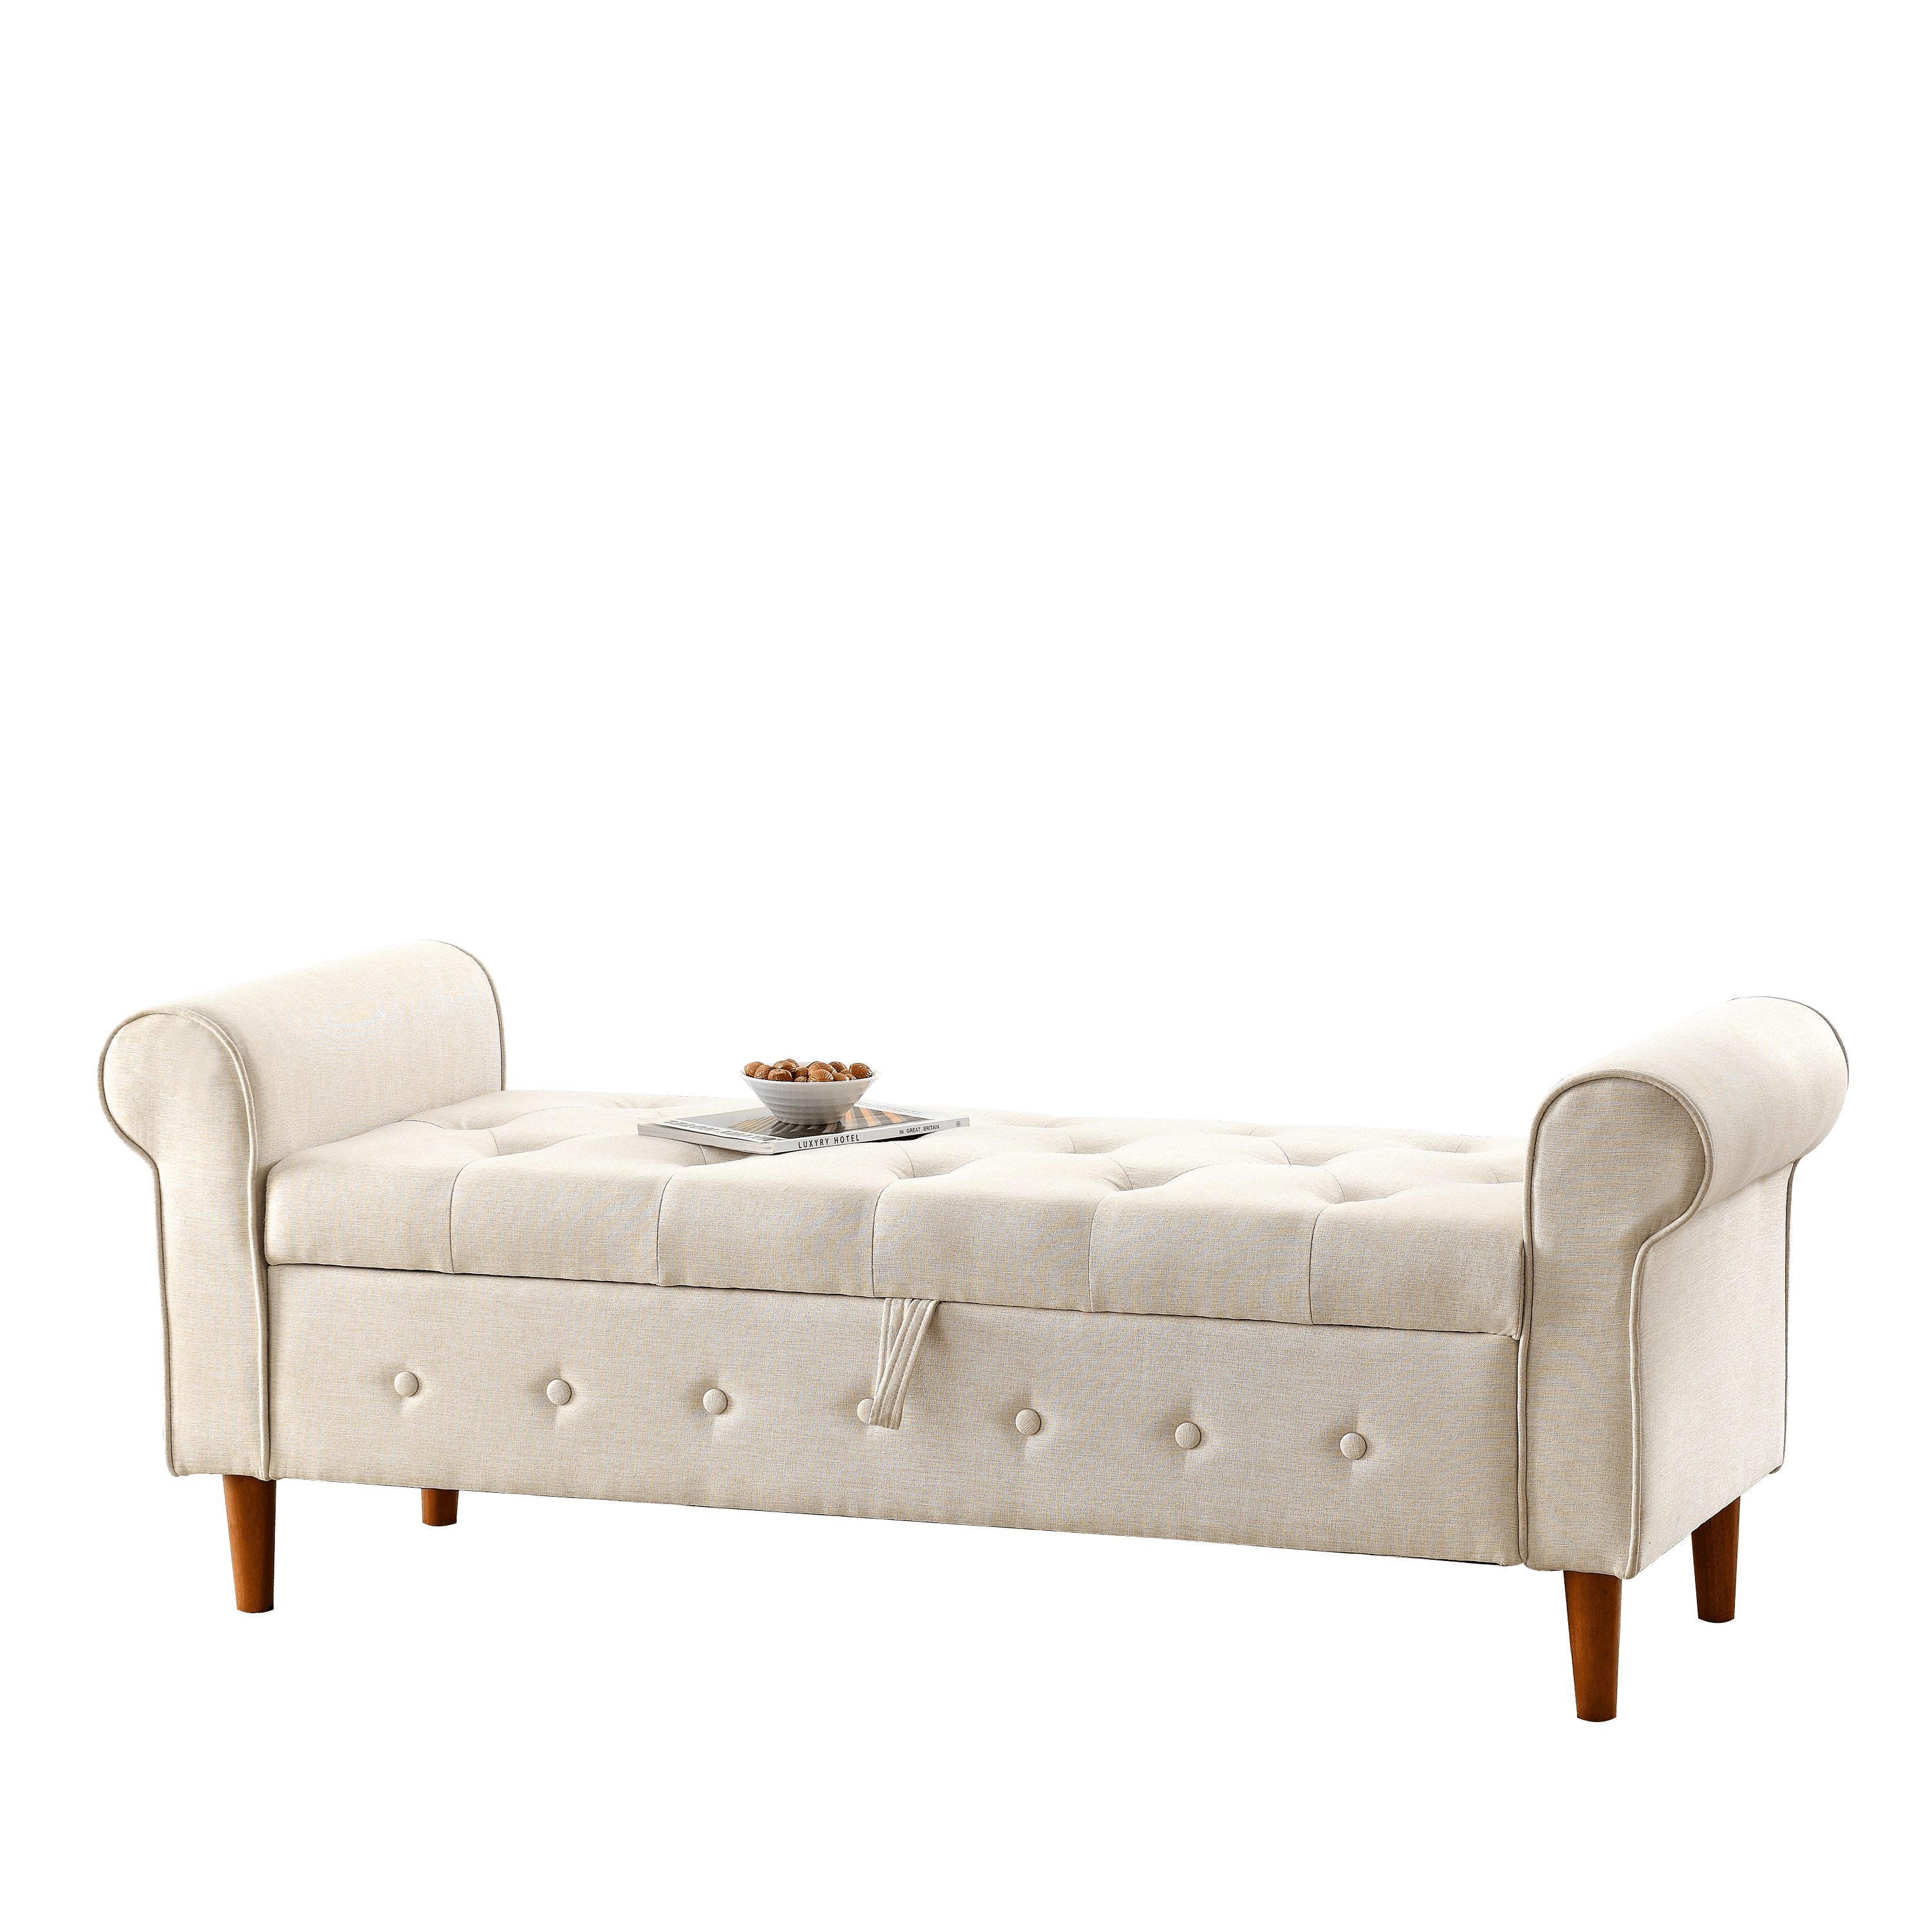 62" Bedroom Tufted Button Storage Bench, Linen Upholstered Ottoman, Window Bench, Rolled Arm Design For Bedroom, Living Room, Foyer (Beige)